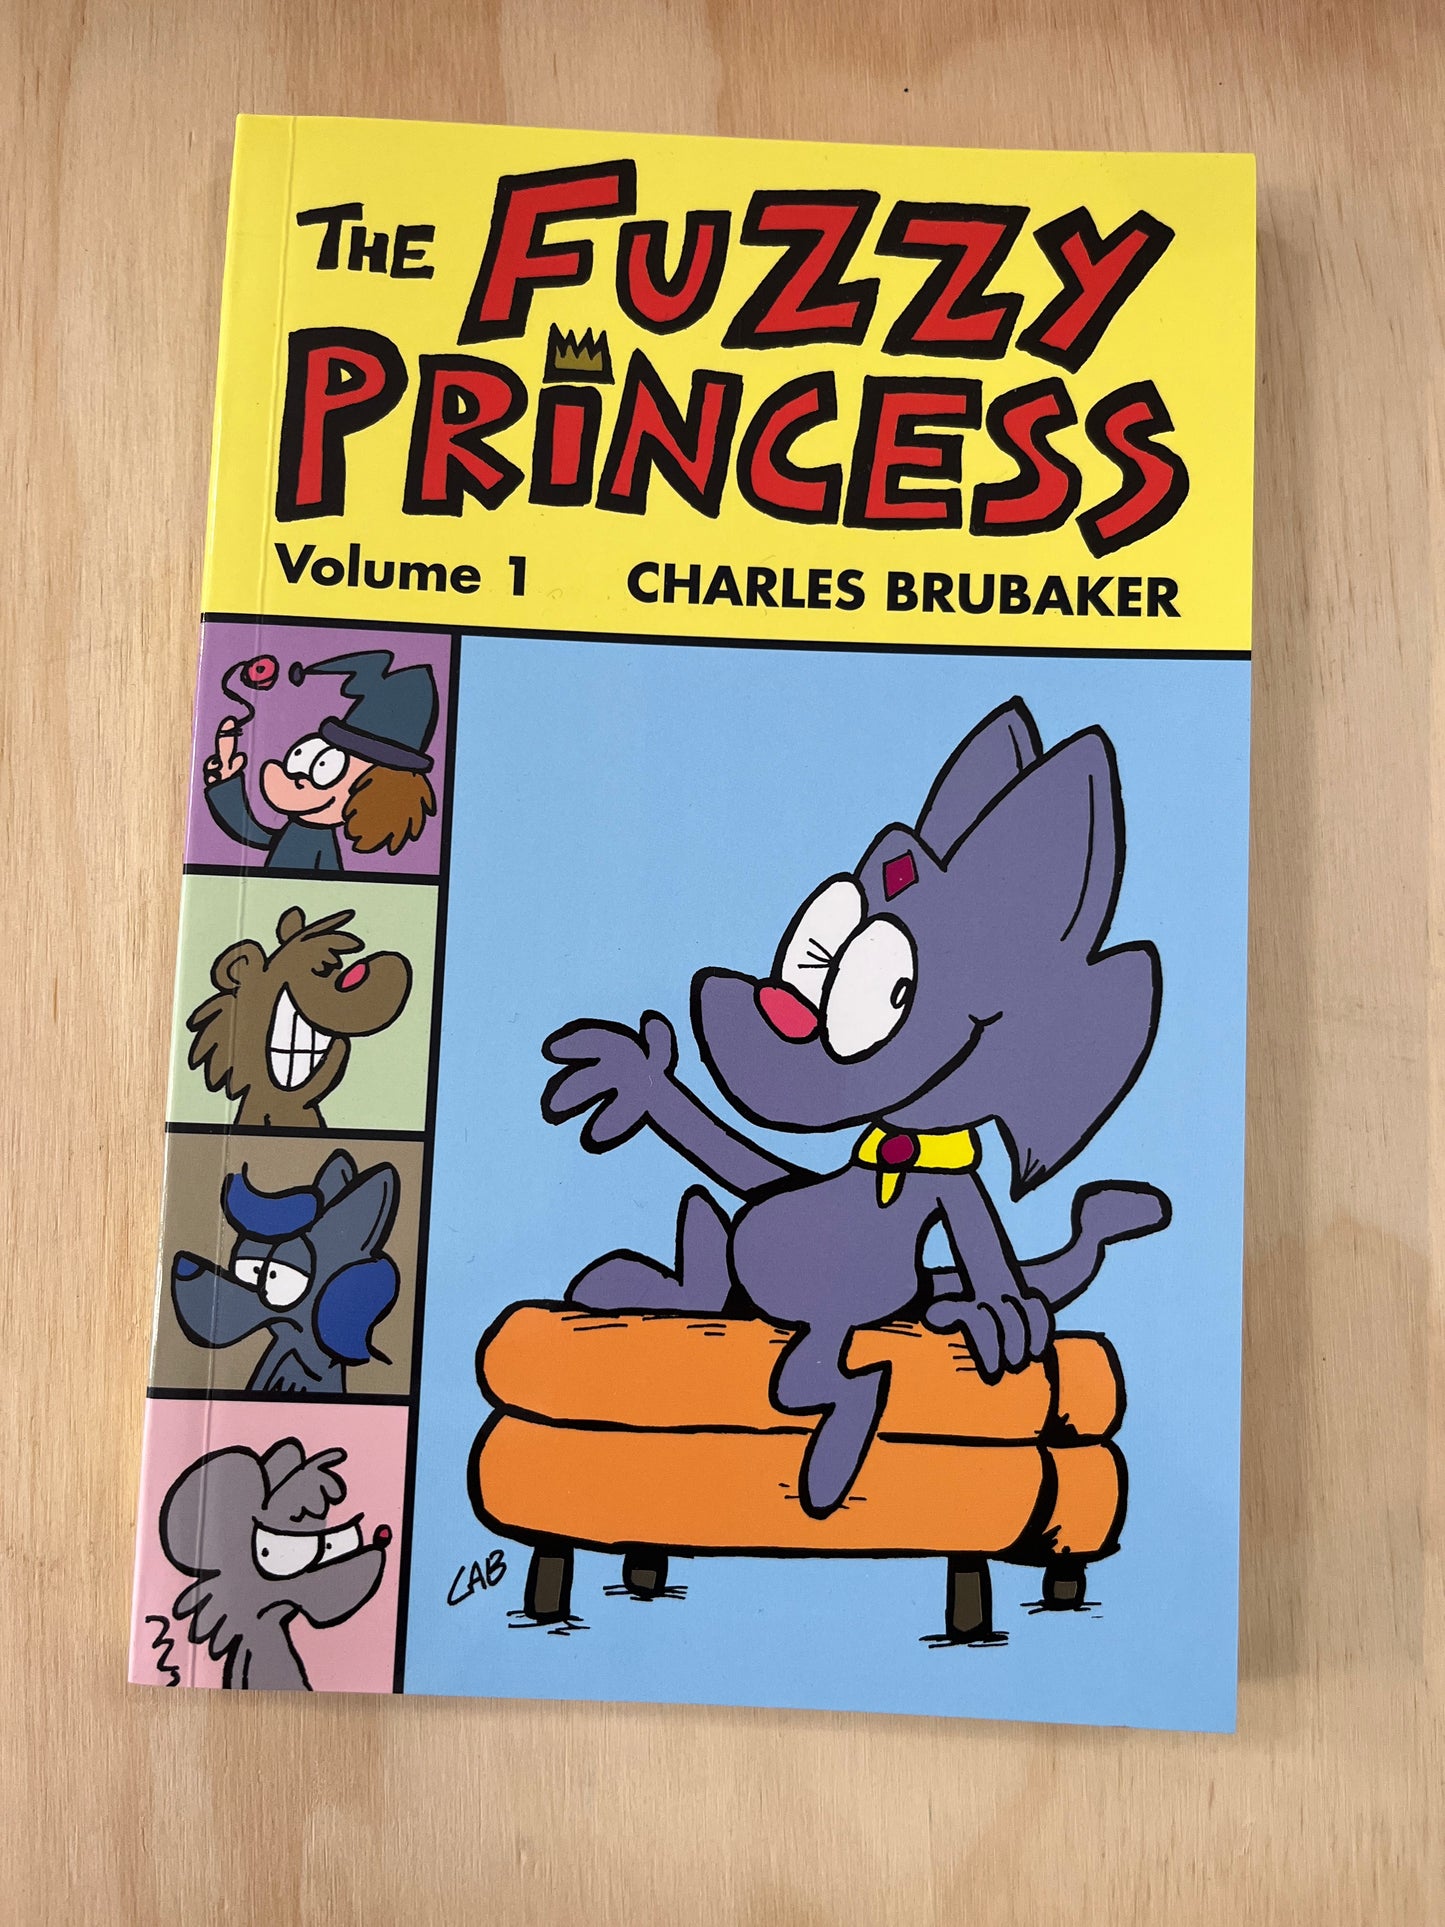 The Fuzzy Princess Volume 1